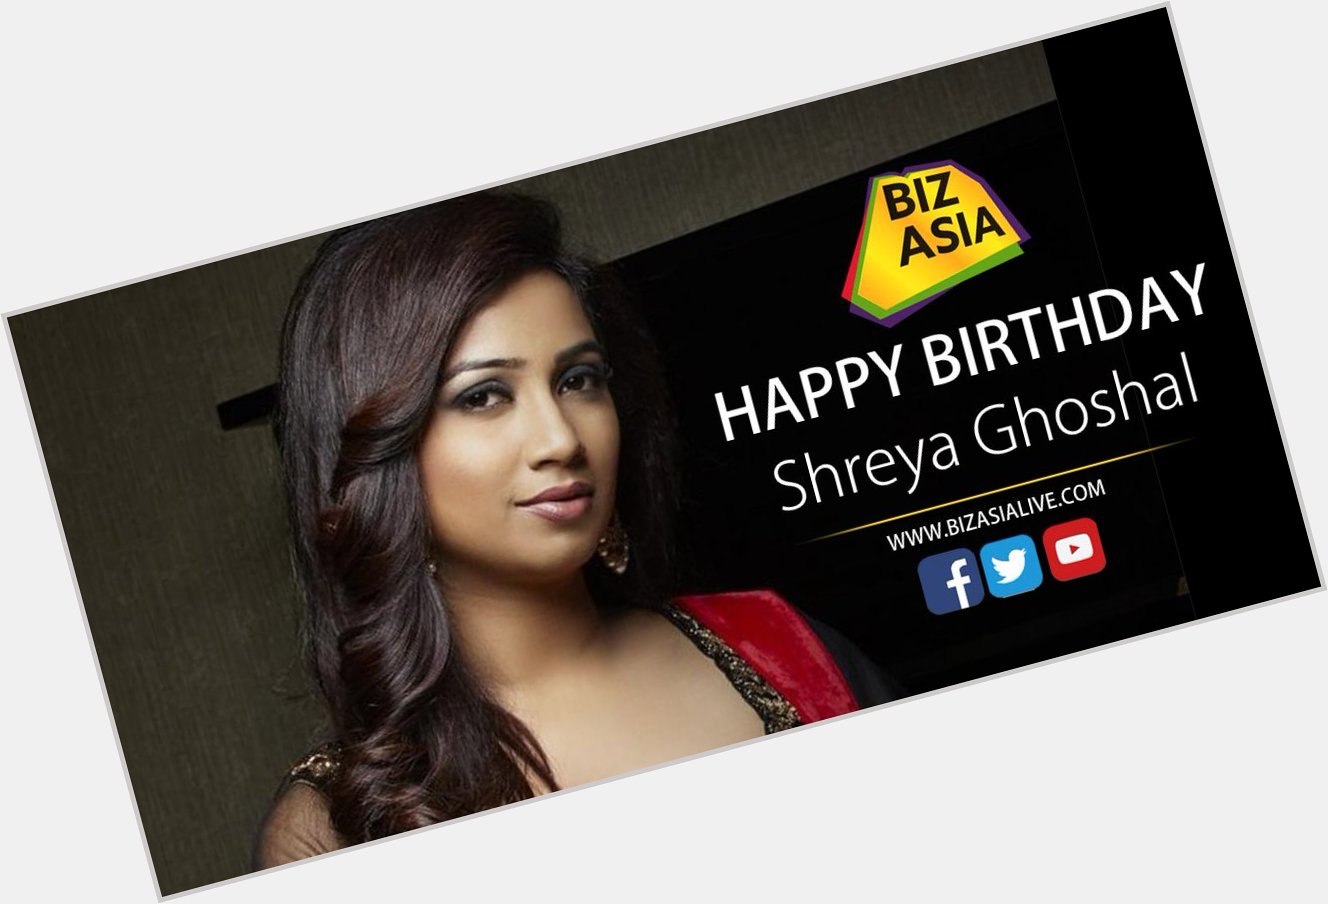  wishes Shreya Ghoshal a very happy birthday.  